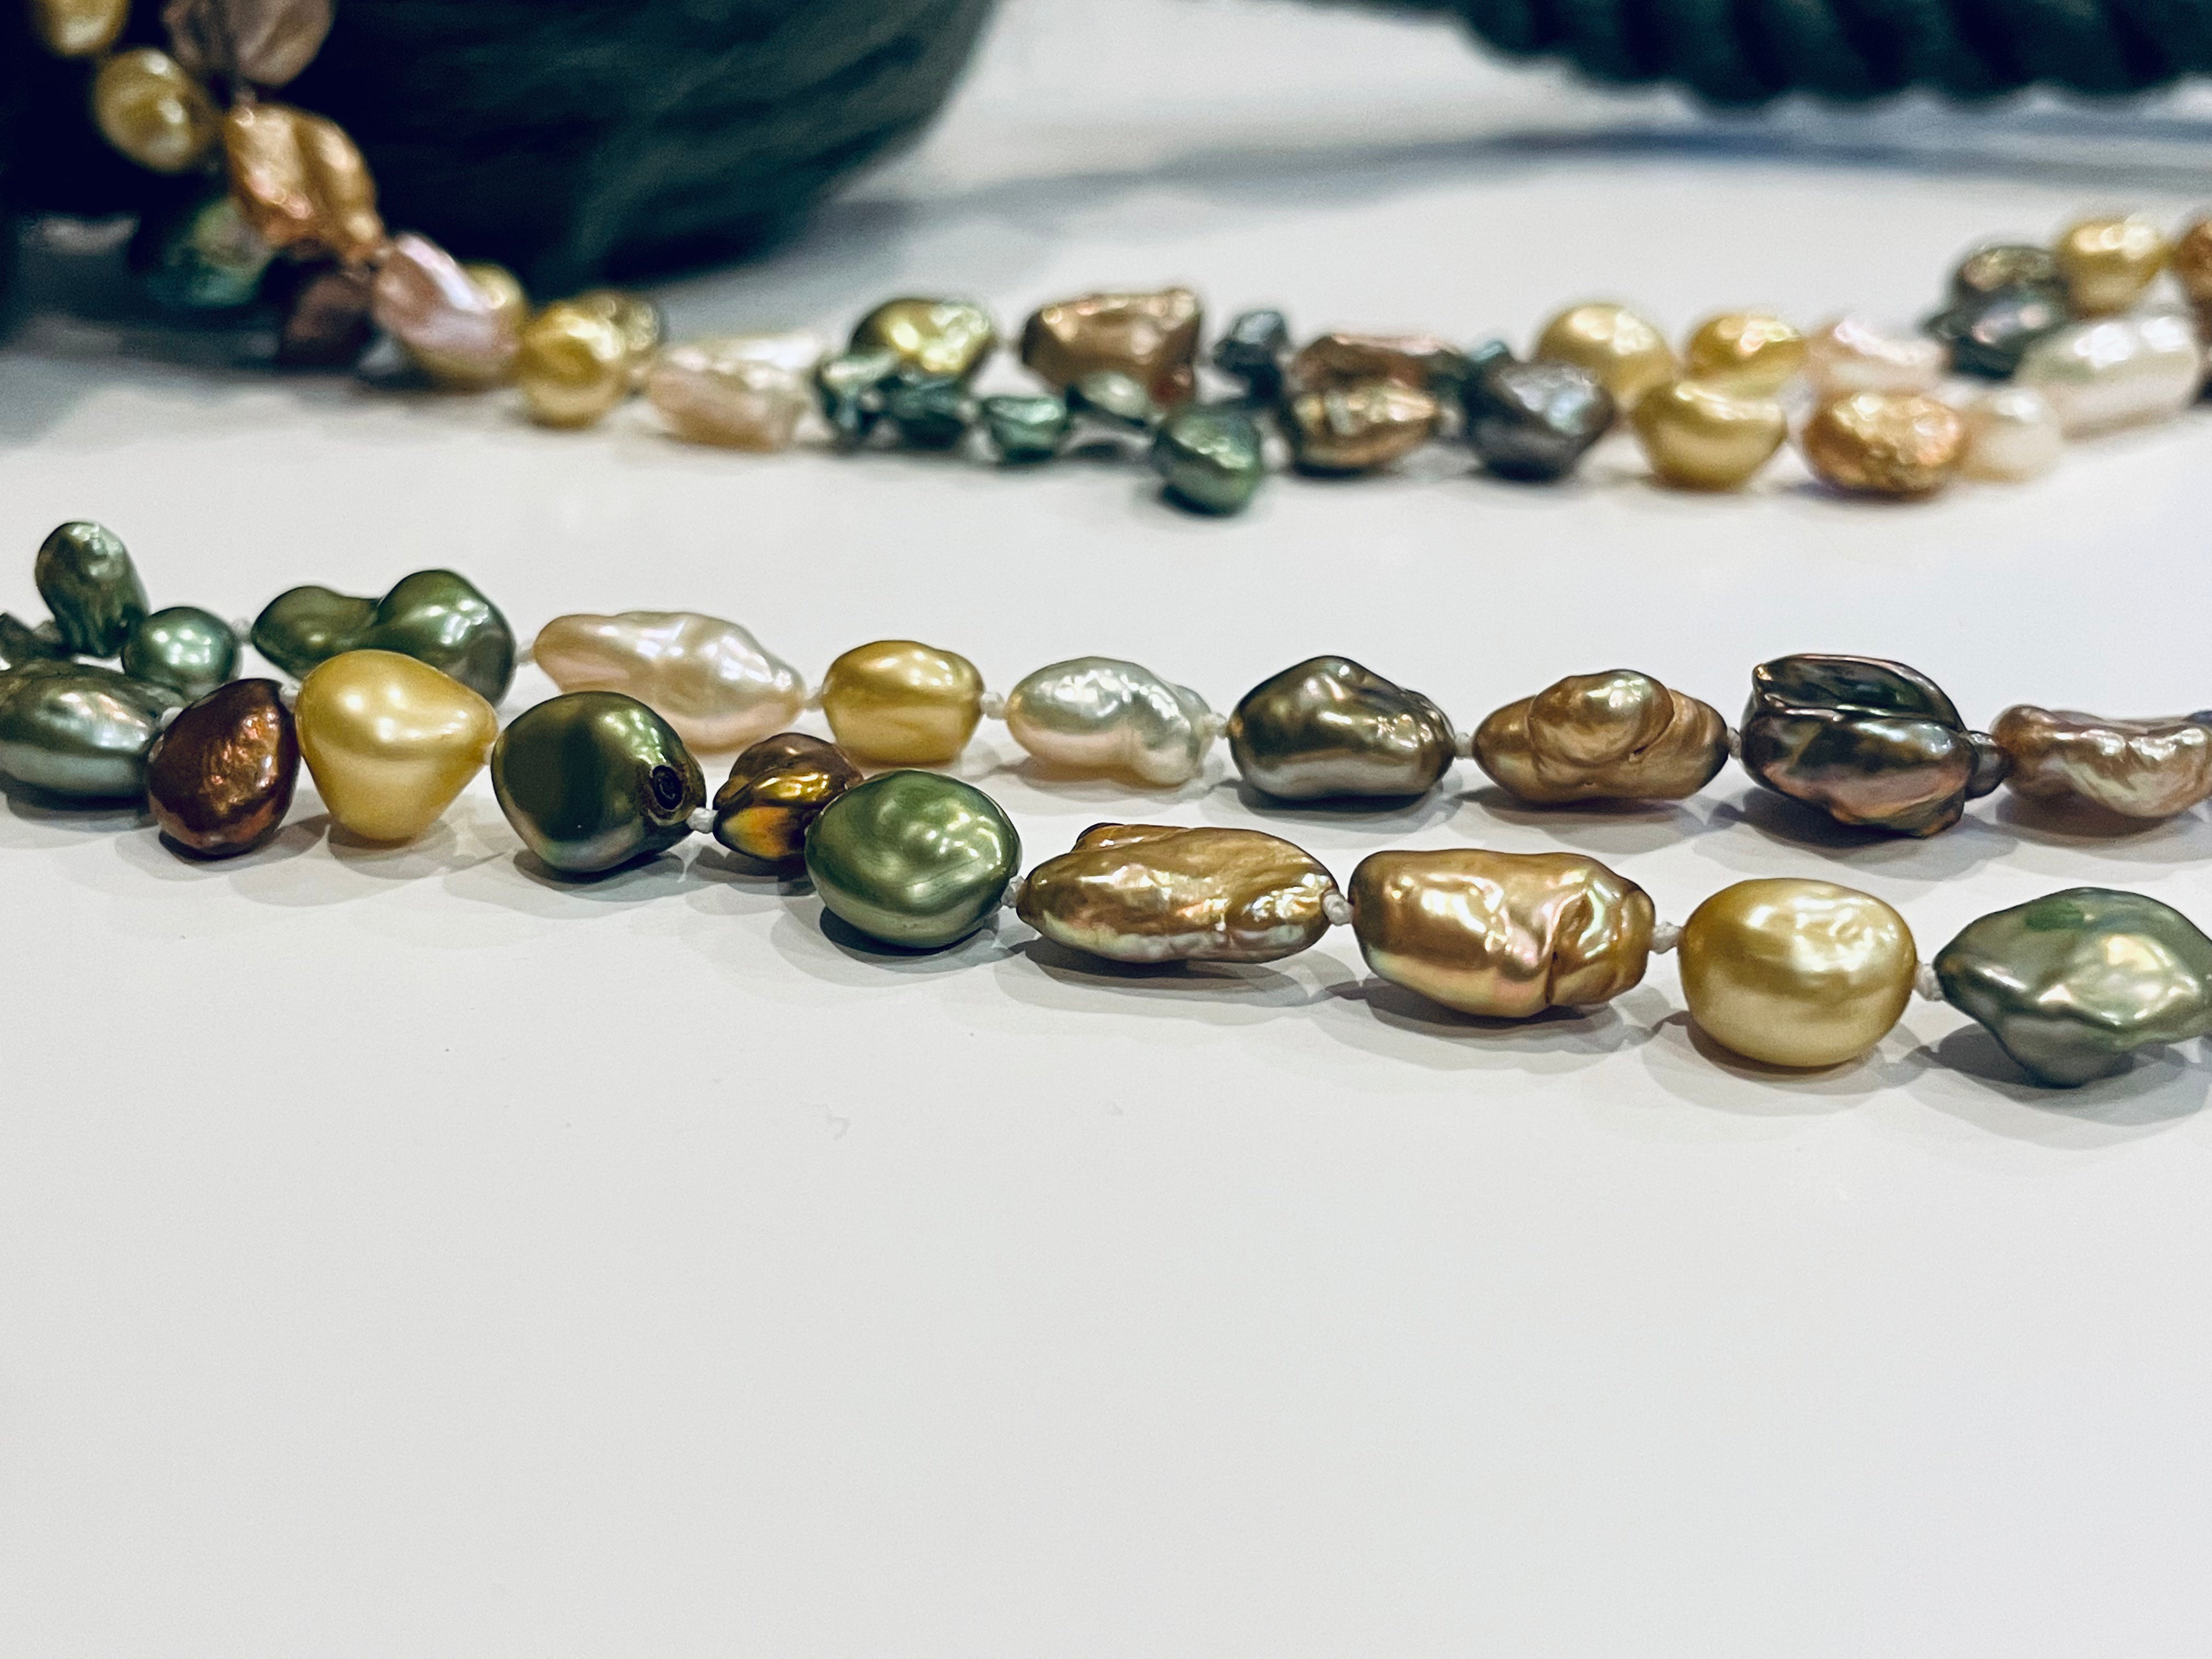 54” long mixed Keshi Pearl necklace